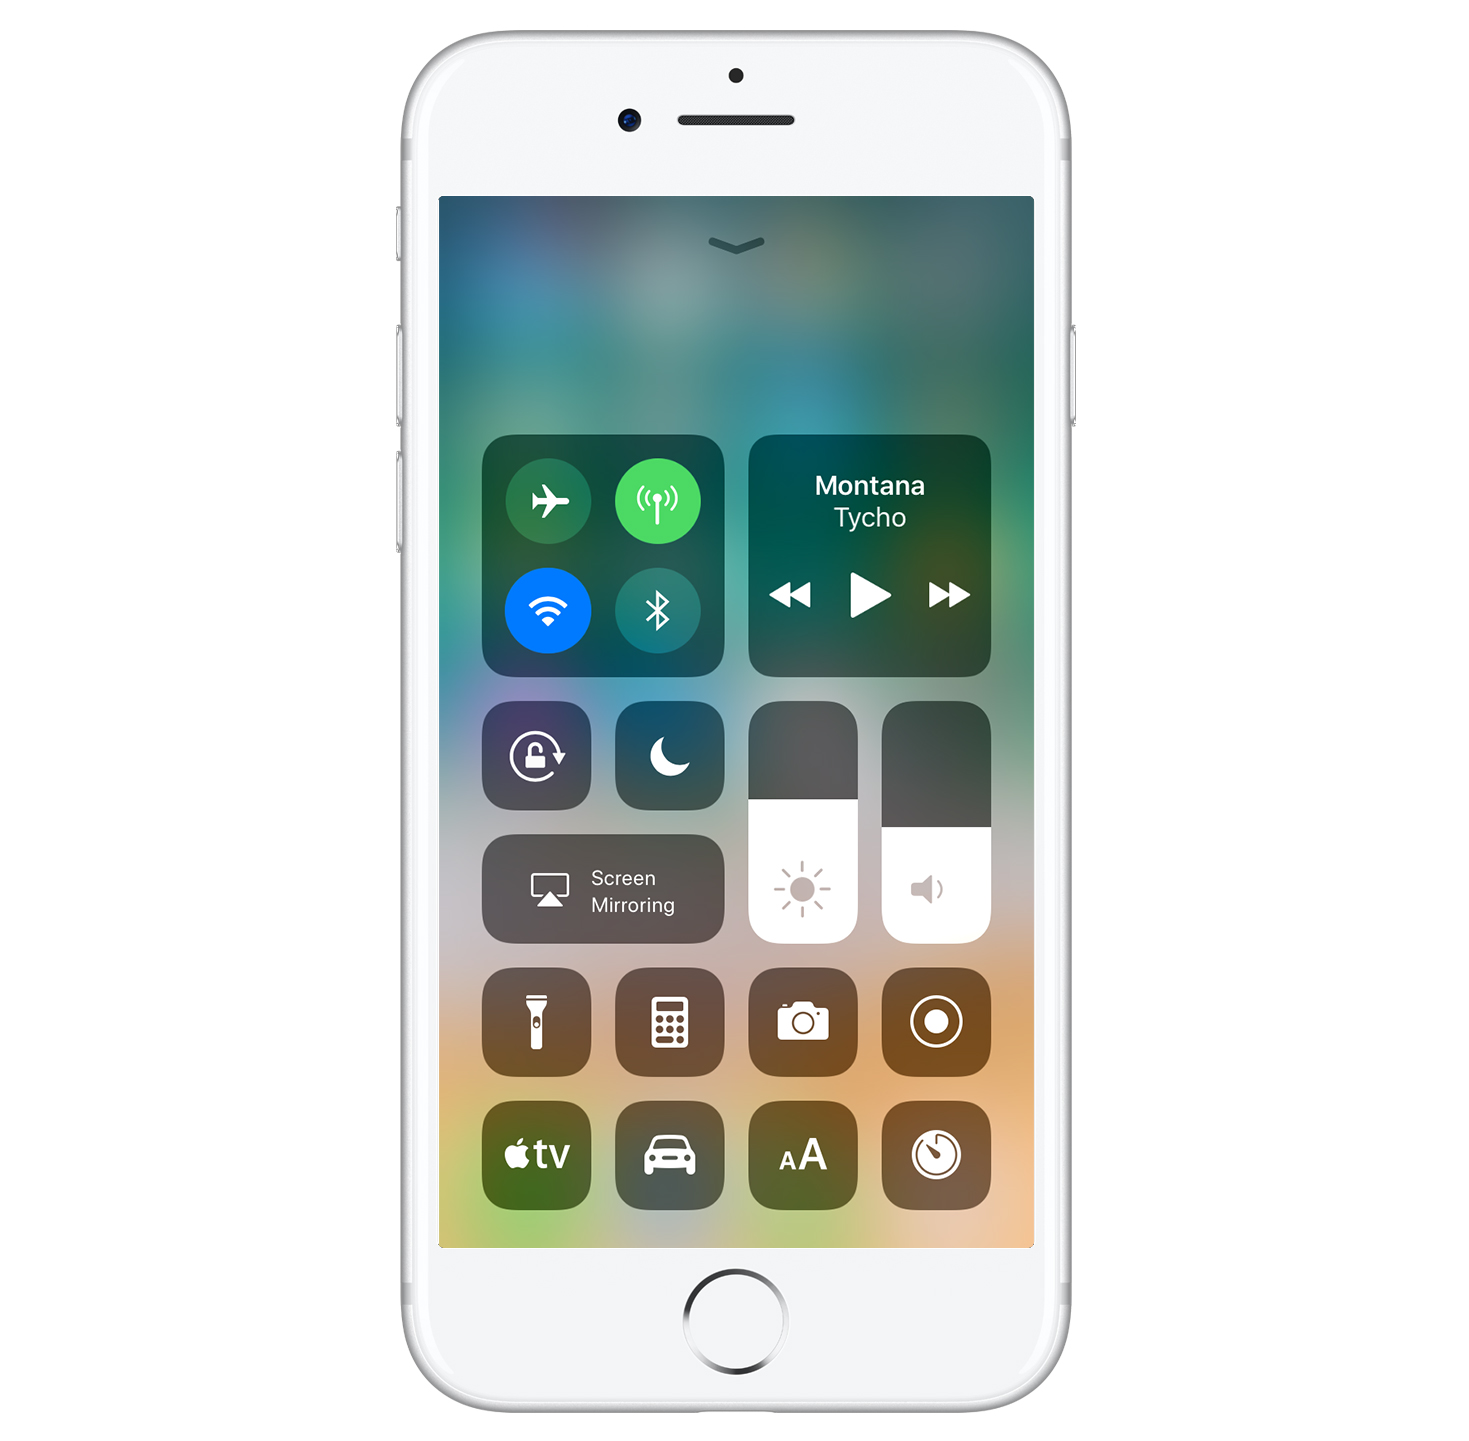 Kontrollzentrum in iOS 11, Hack4Life